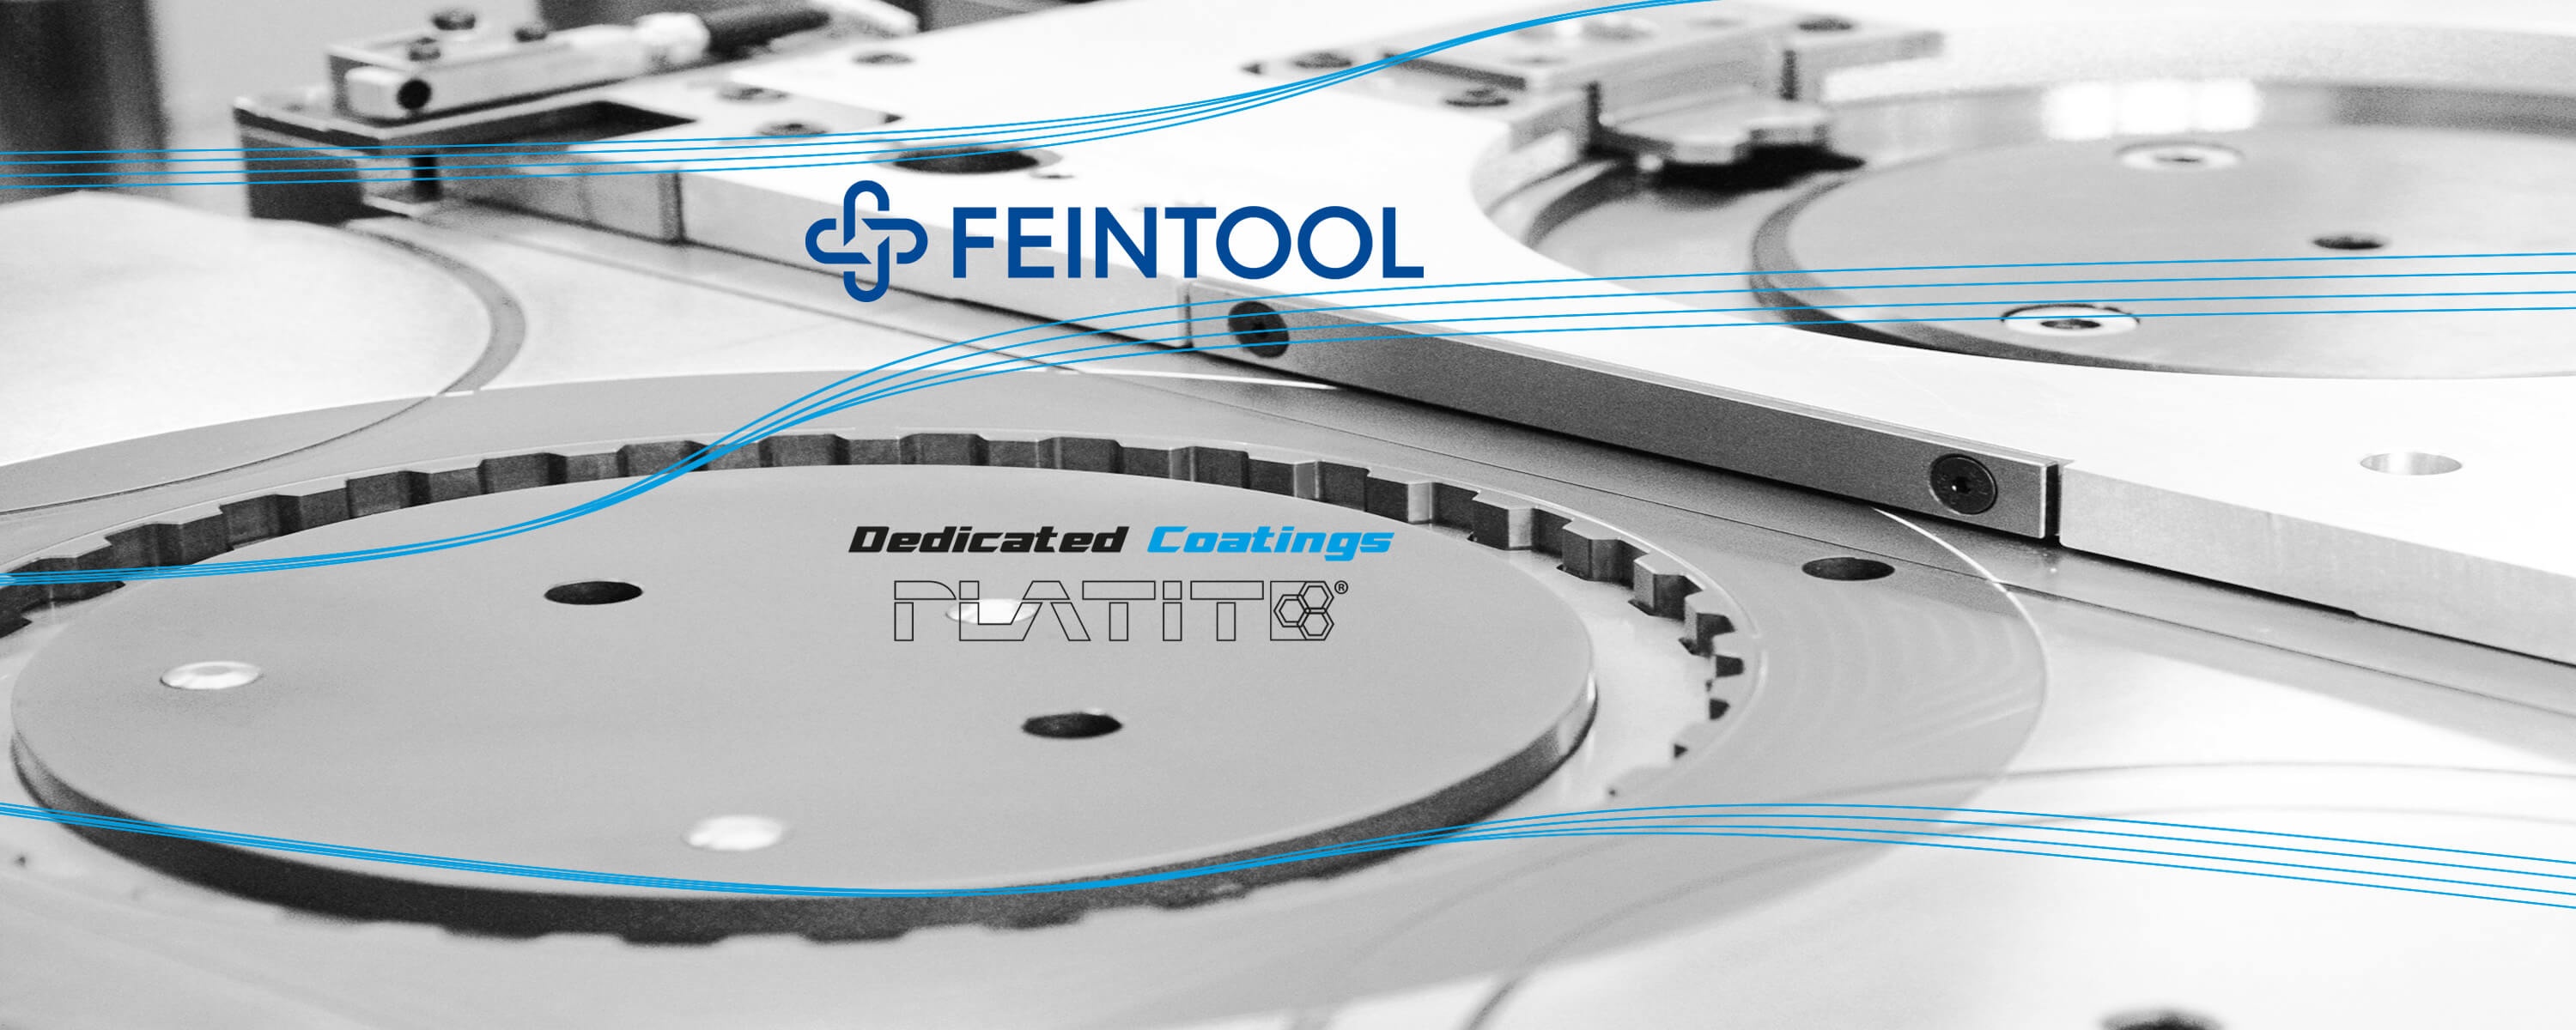 New dedicated coating: FeinAl Plus